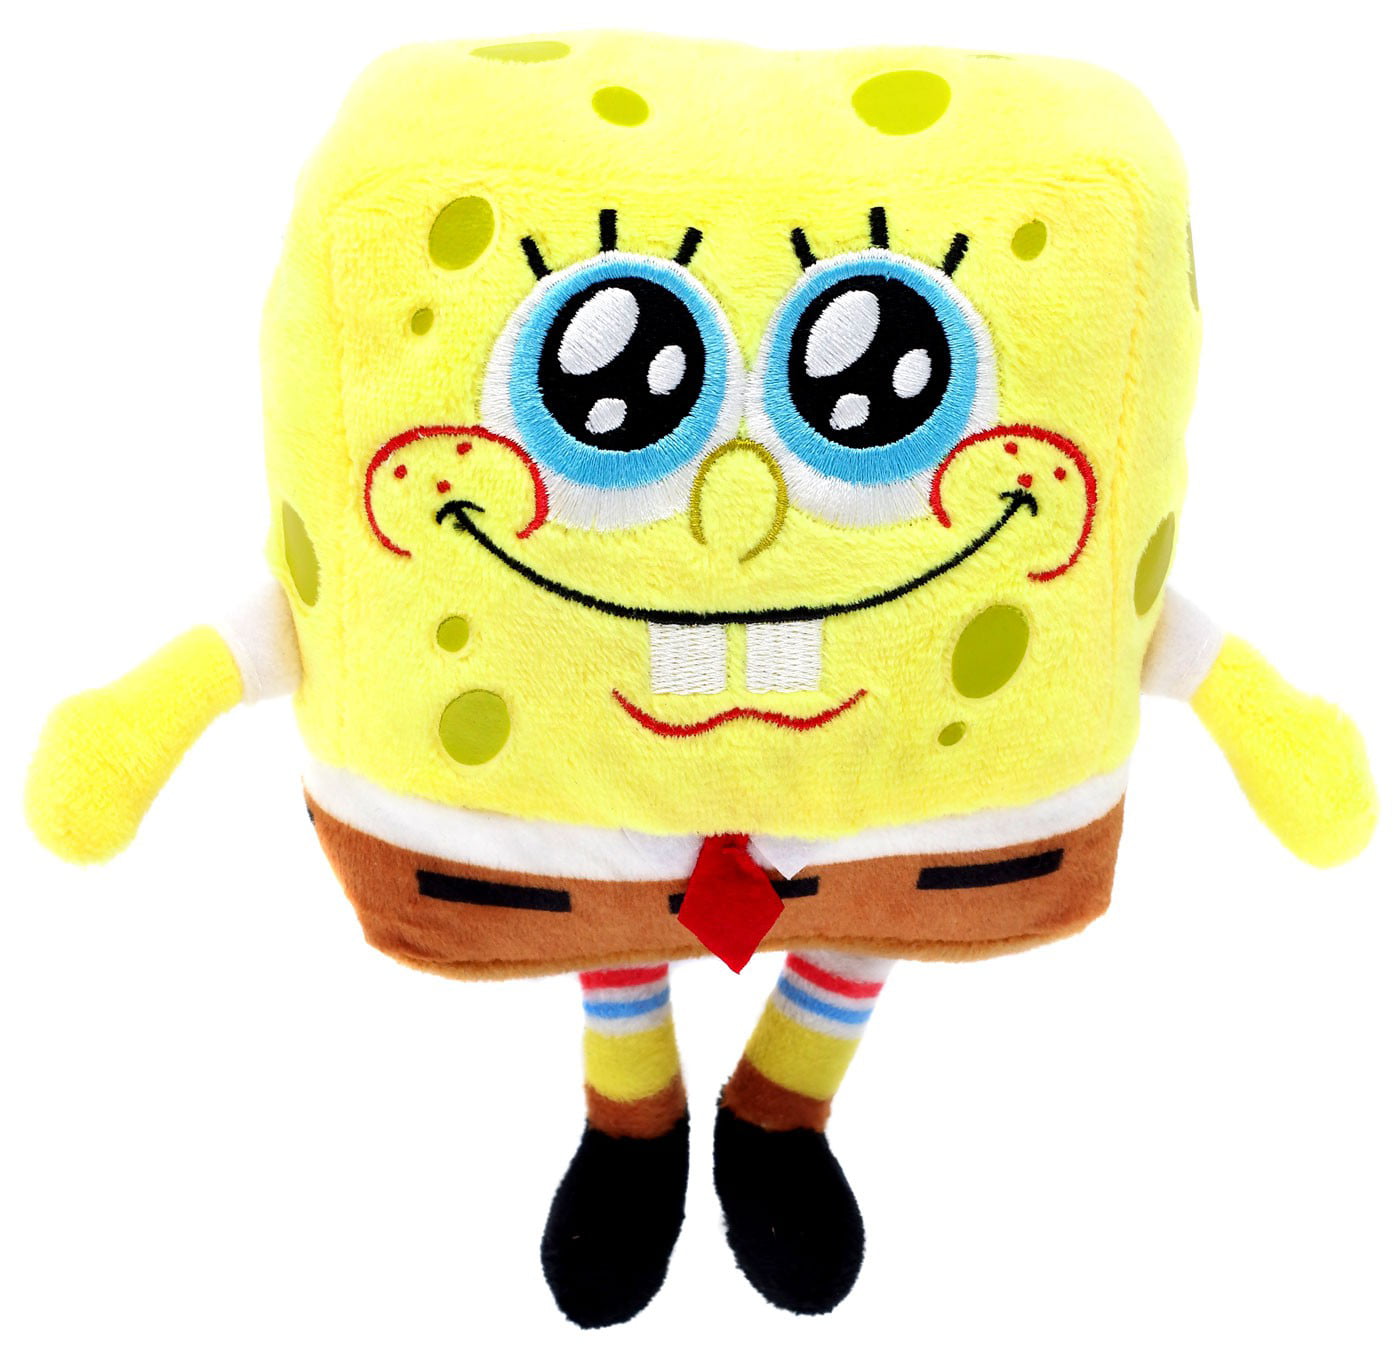 Nickelodeon Spongebob Squarepants Mini Plush [Closed Mouth] - Walmart.com